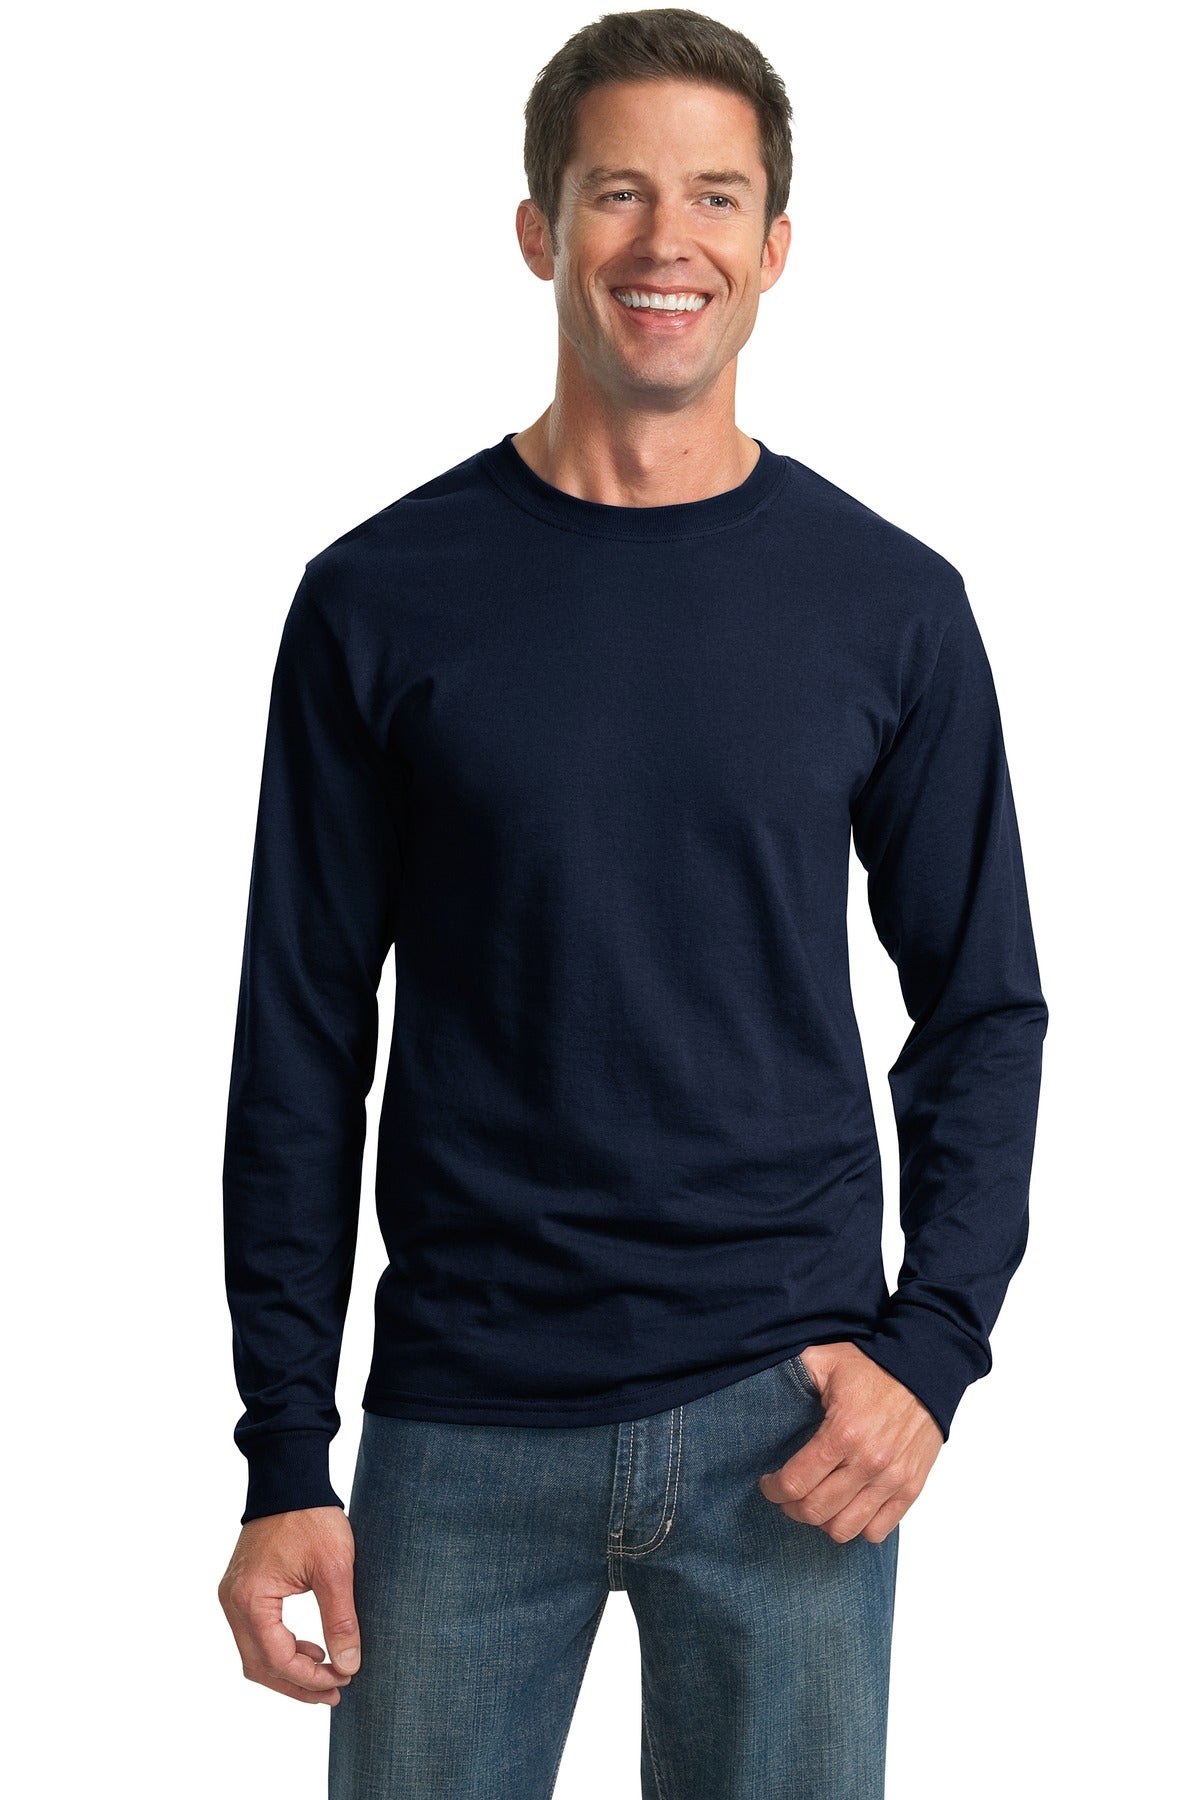 JERZEES® - Dri-Power® 50/50 Cotton/Poly Long Sleeve T-Shirt. 29LS [Navy] - DFW Impression